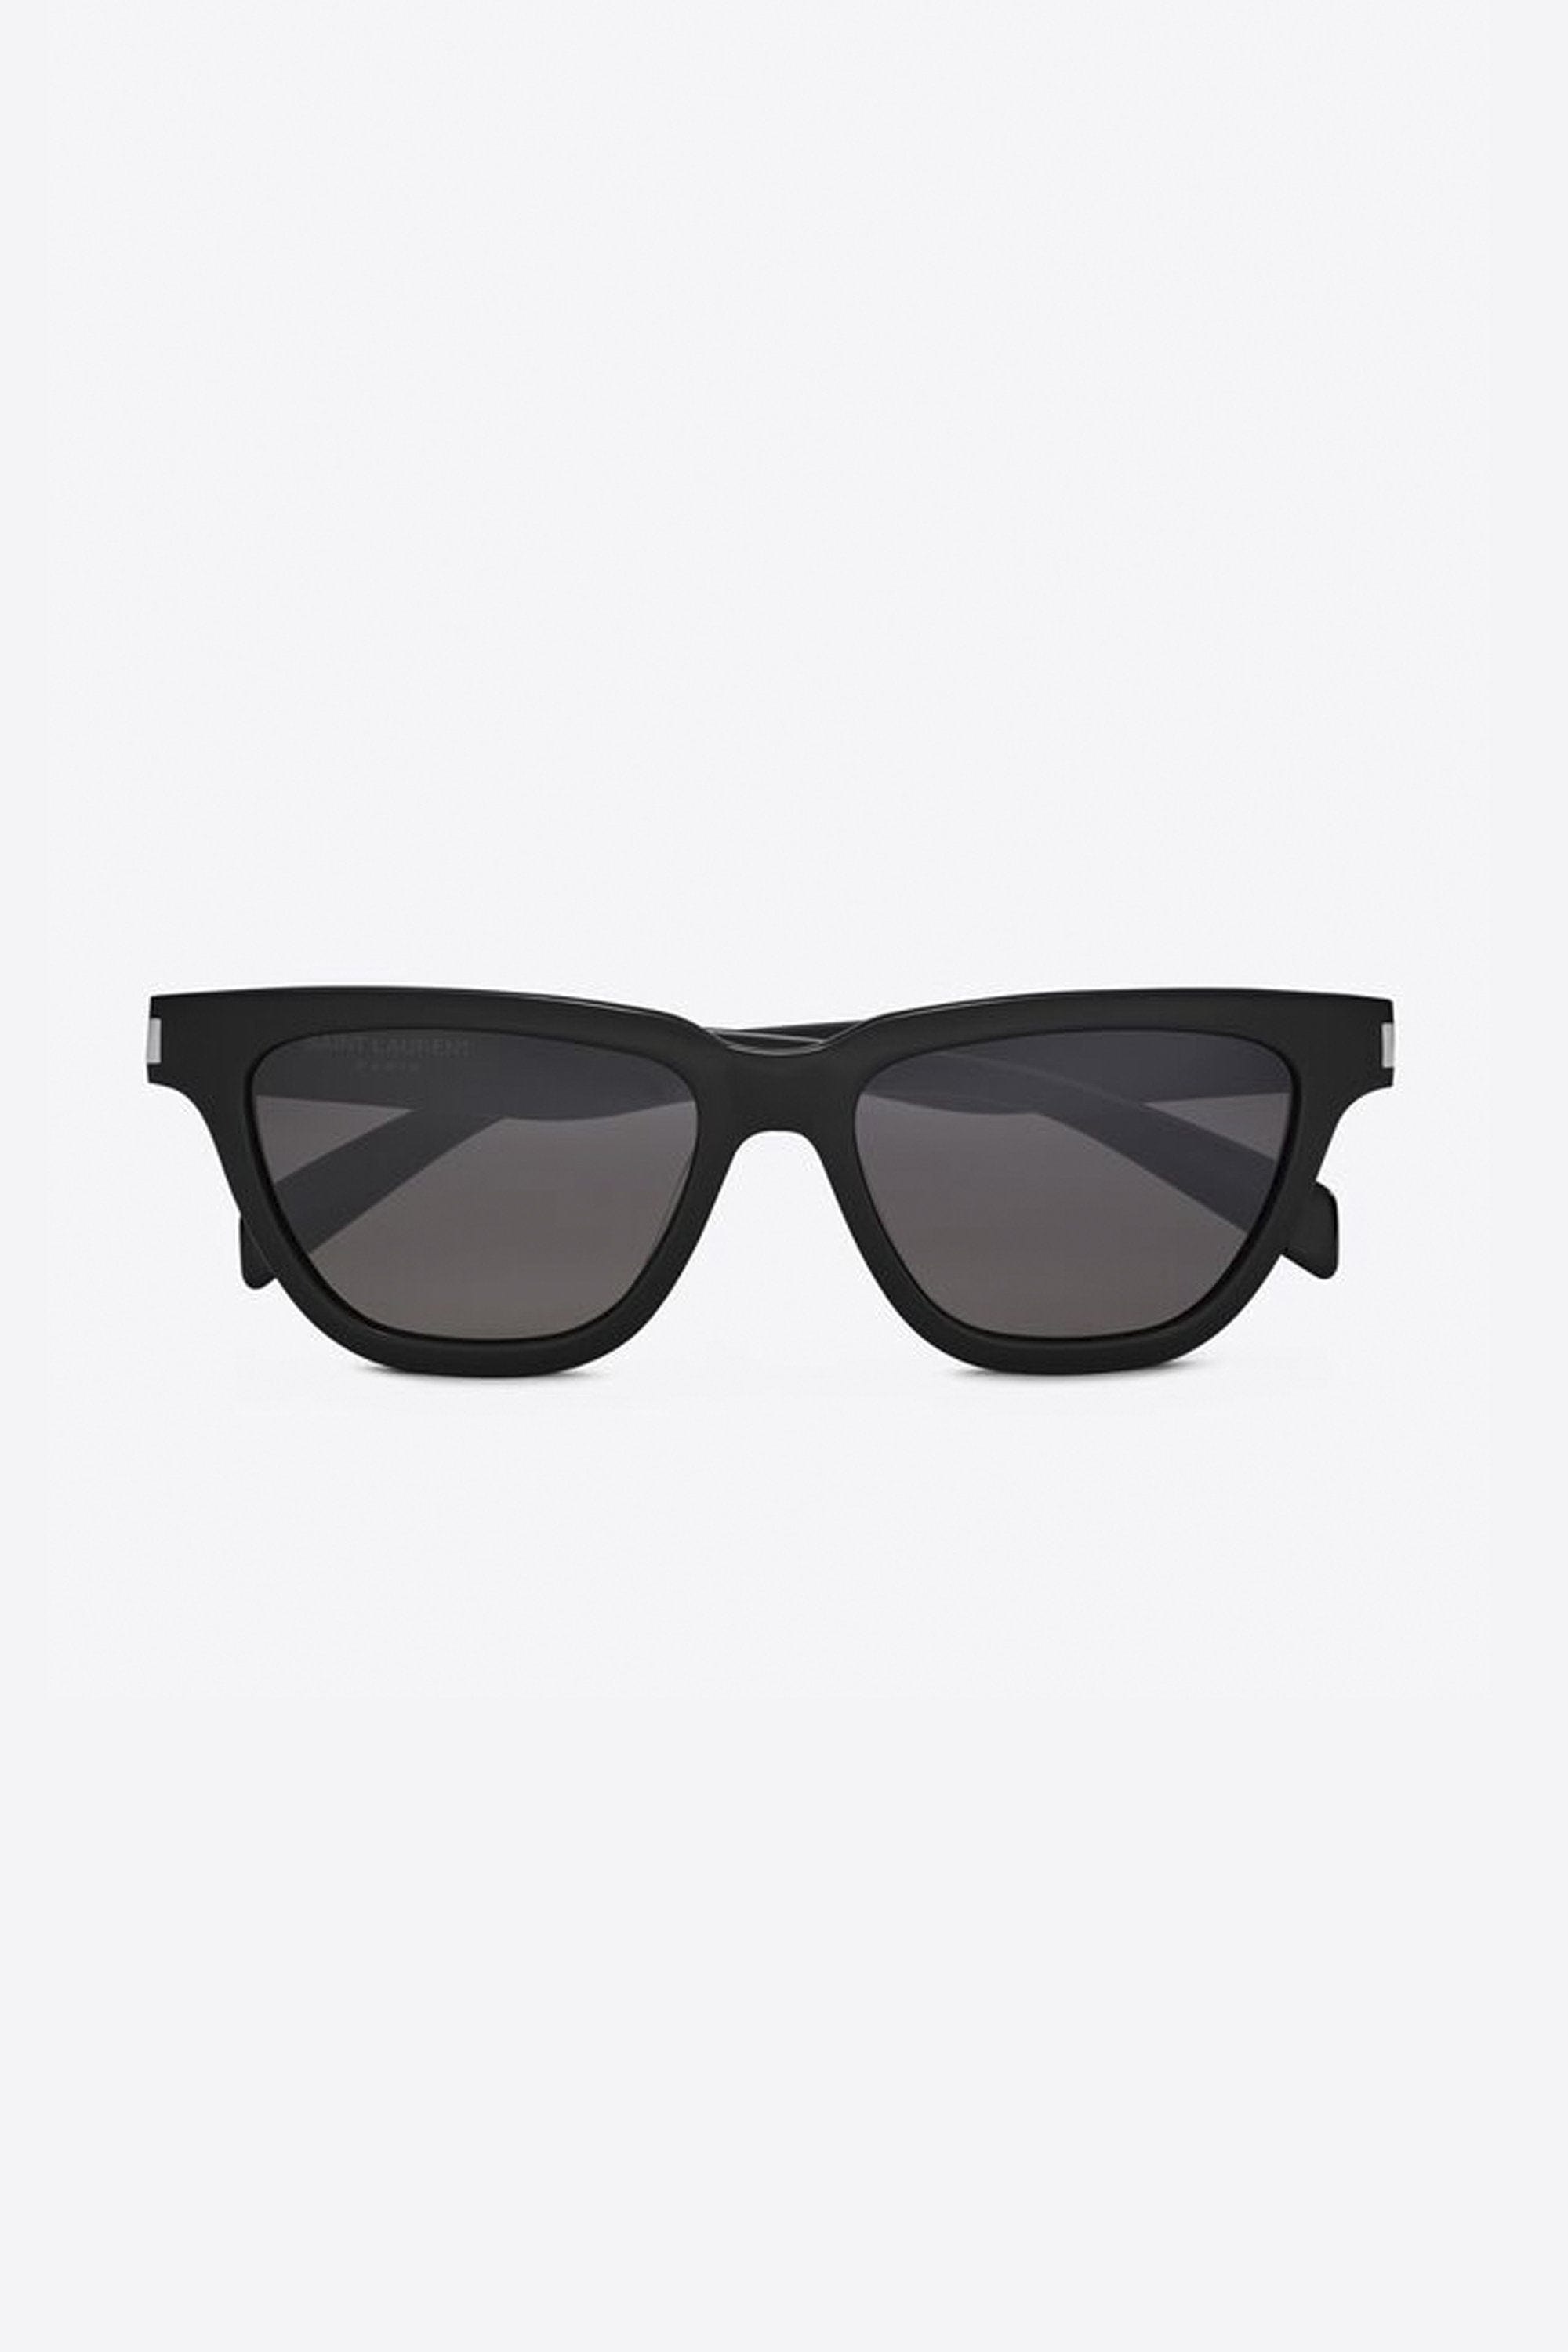 Saint Laurent SULPICE angular cat-eye UNISEX sunglasses - Eyewear Club